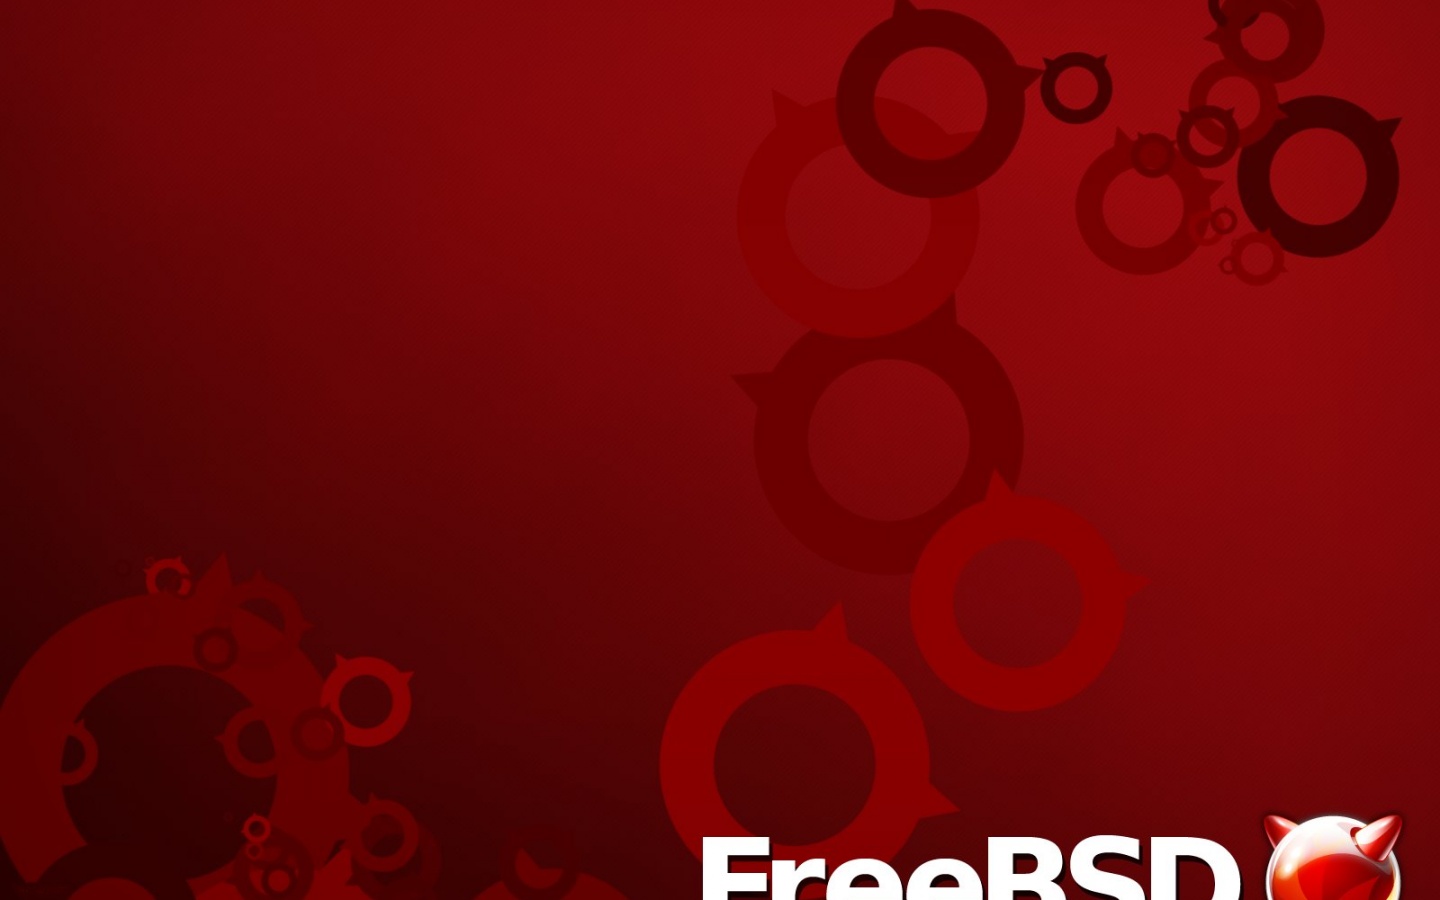 Red Bsd Logo Desktop Pc And Mac Wallpaper